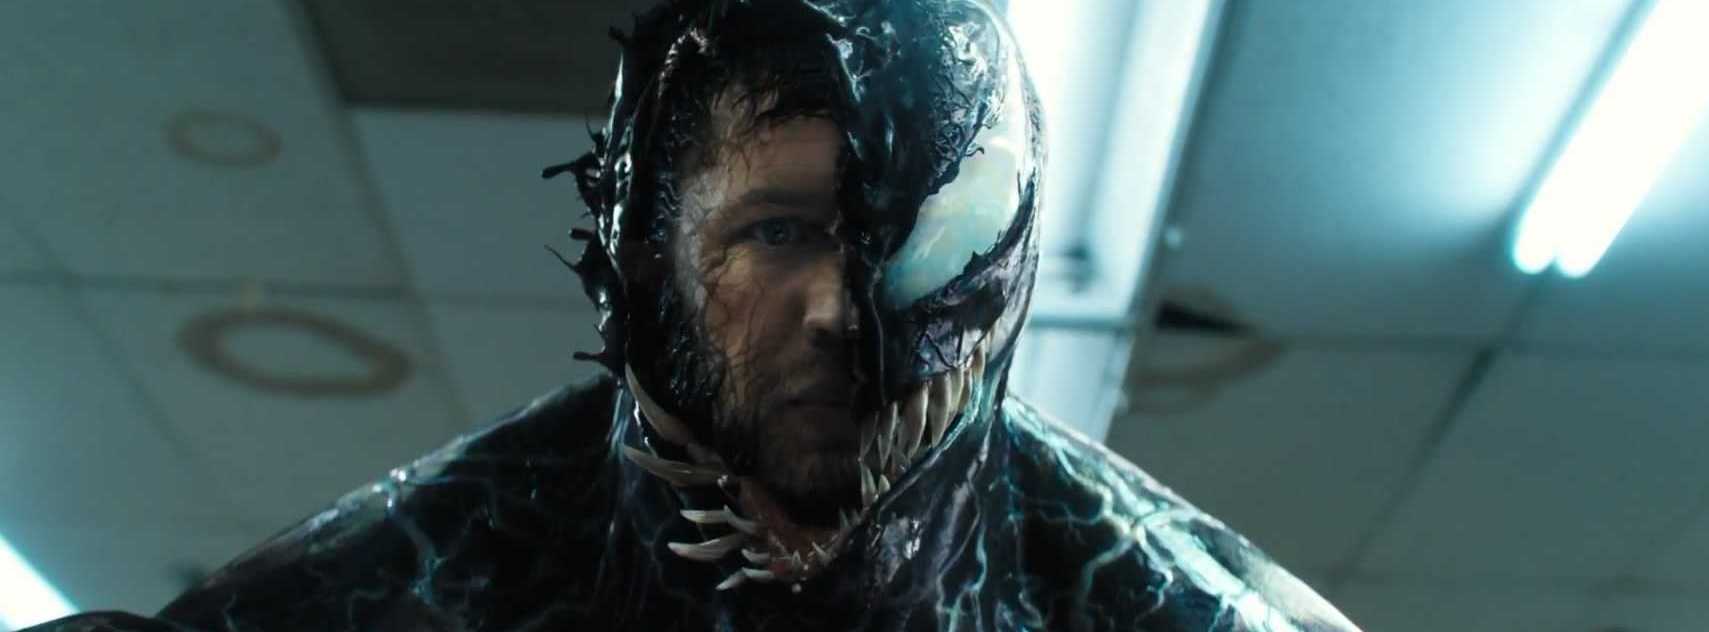 Venom Movie Reviews and Ratings